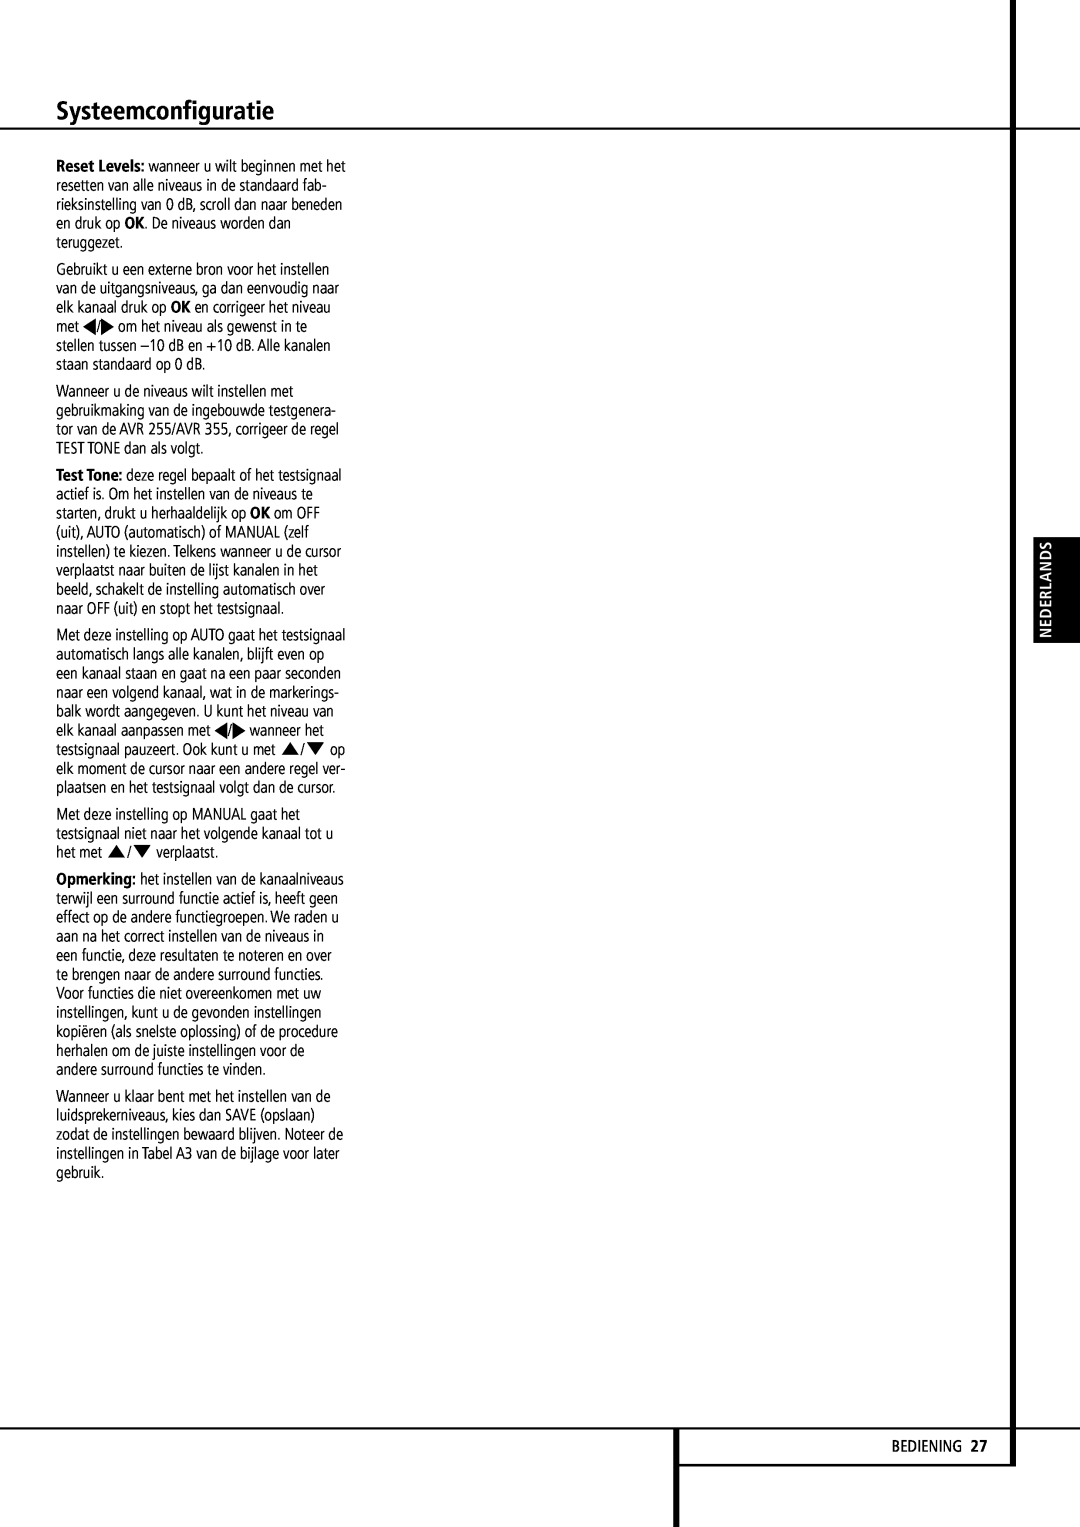 Harman-Kardon 355, 255 manual Systeemconfiguratie, Nederlands, Bediening 